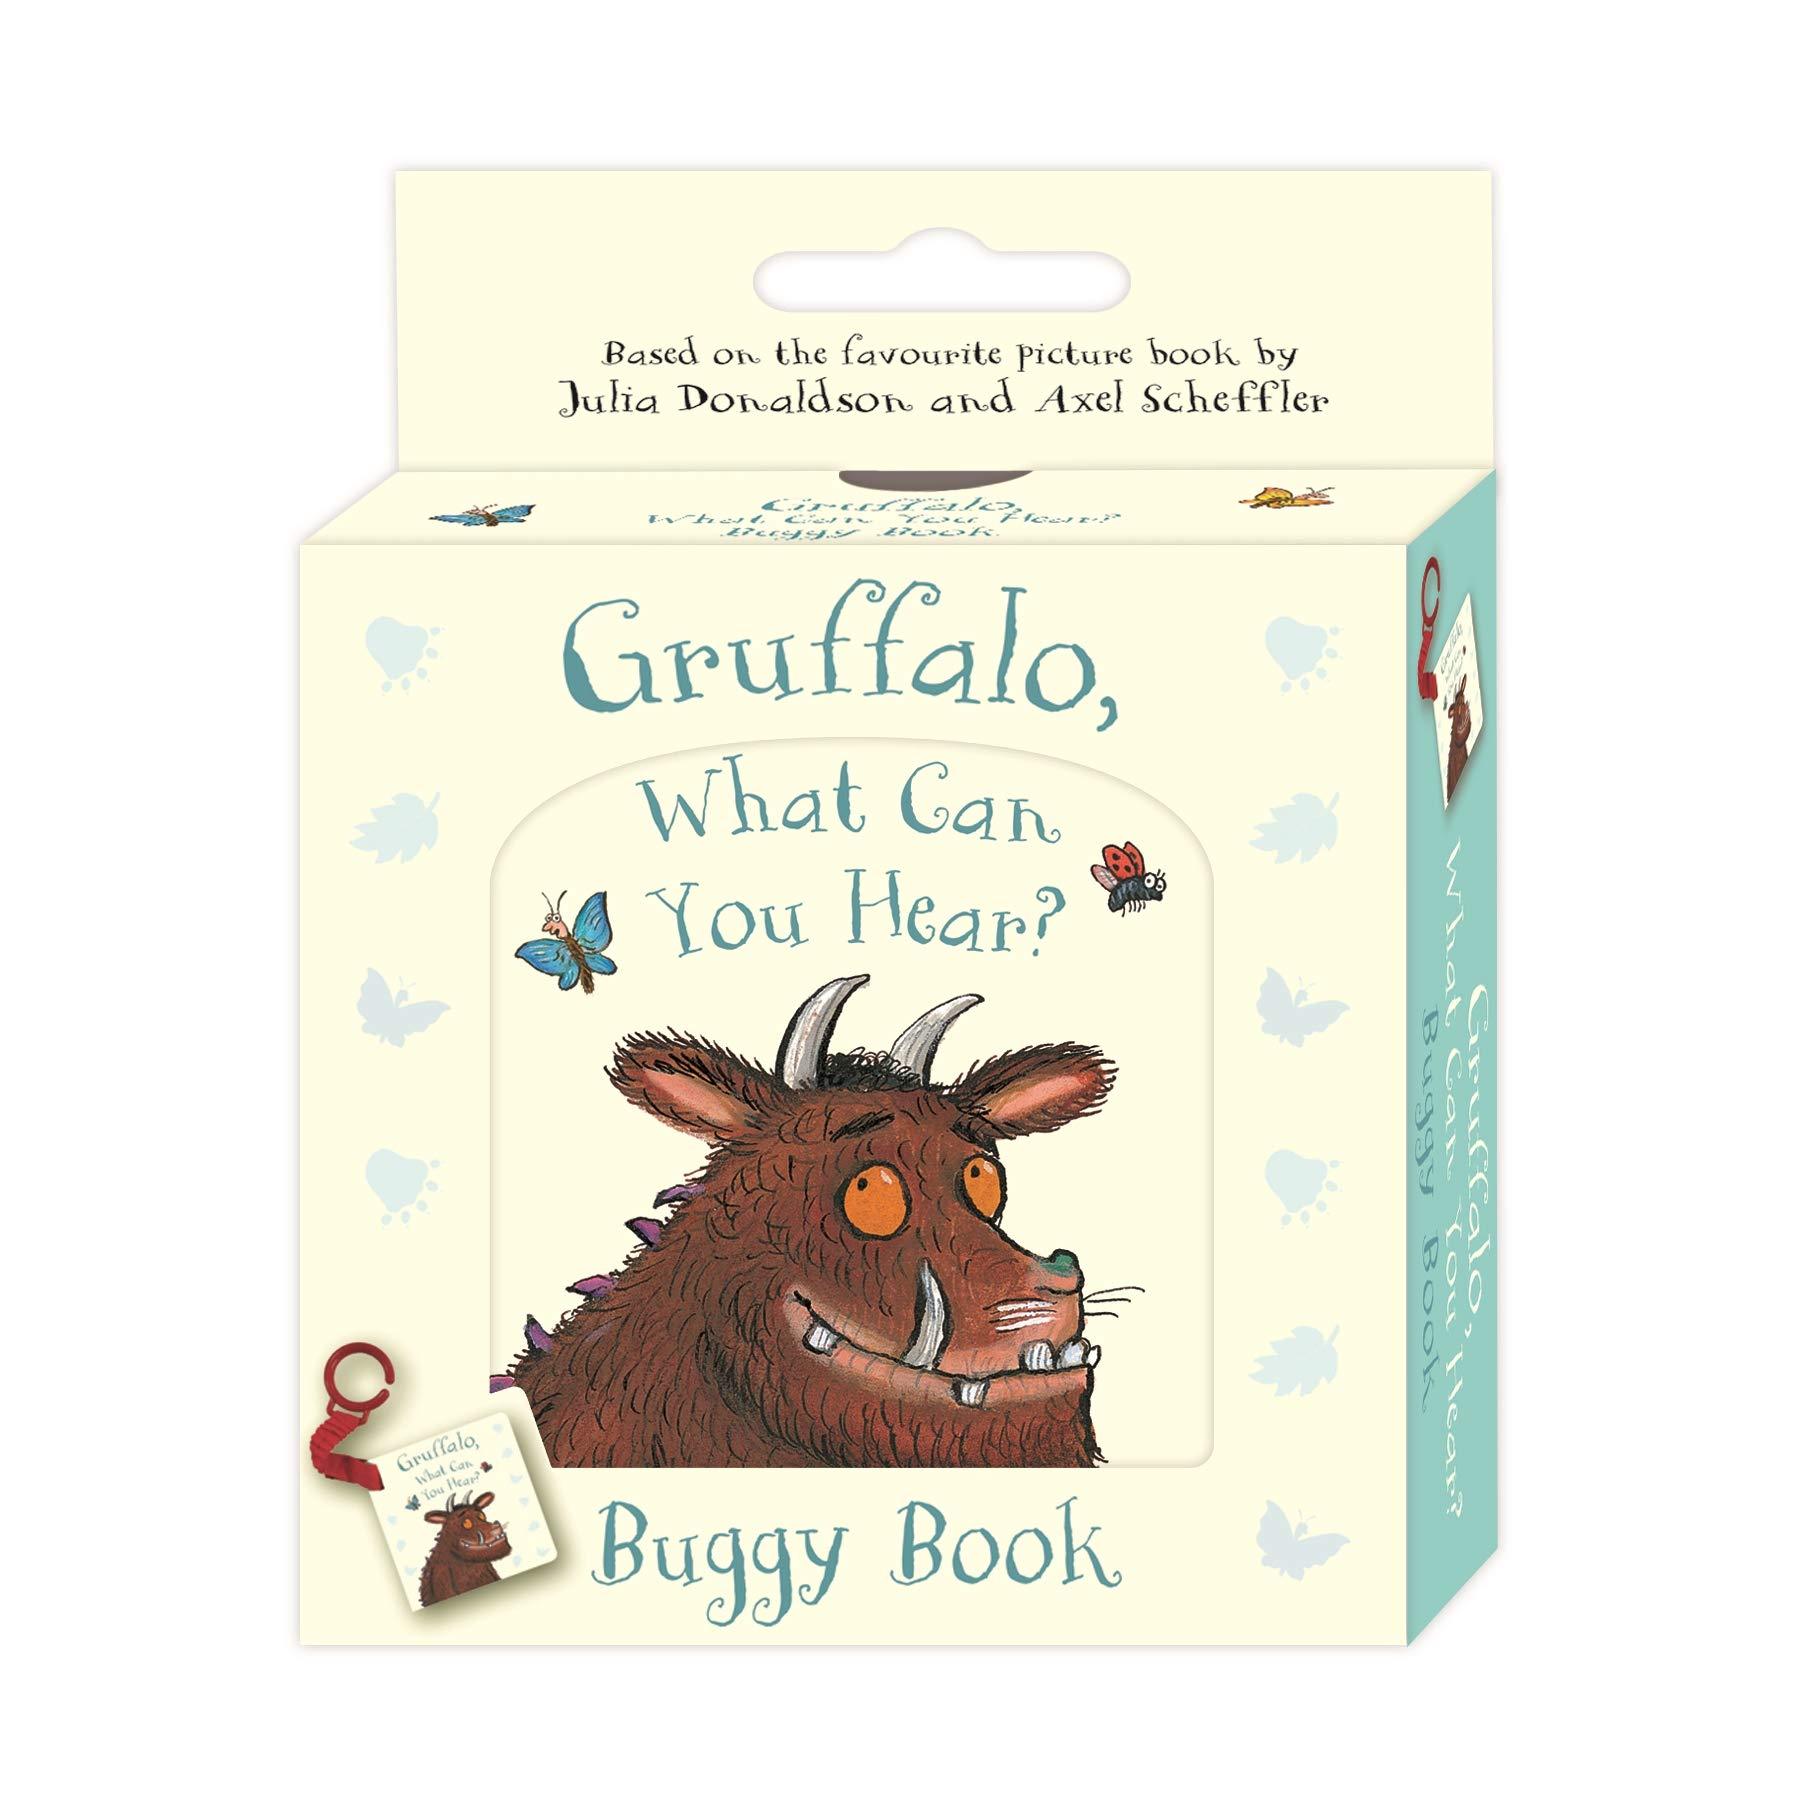 Gruffalo, What Can You Hear? (Buggy Book)